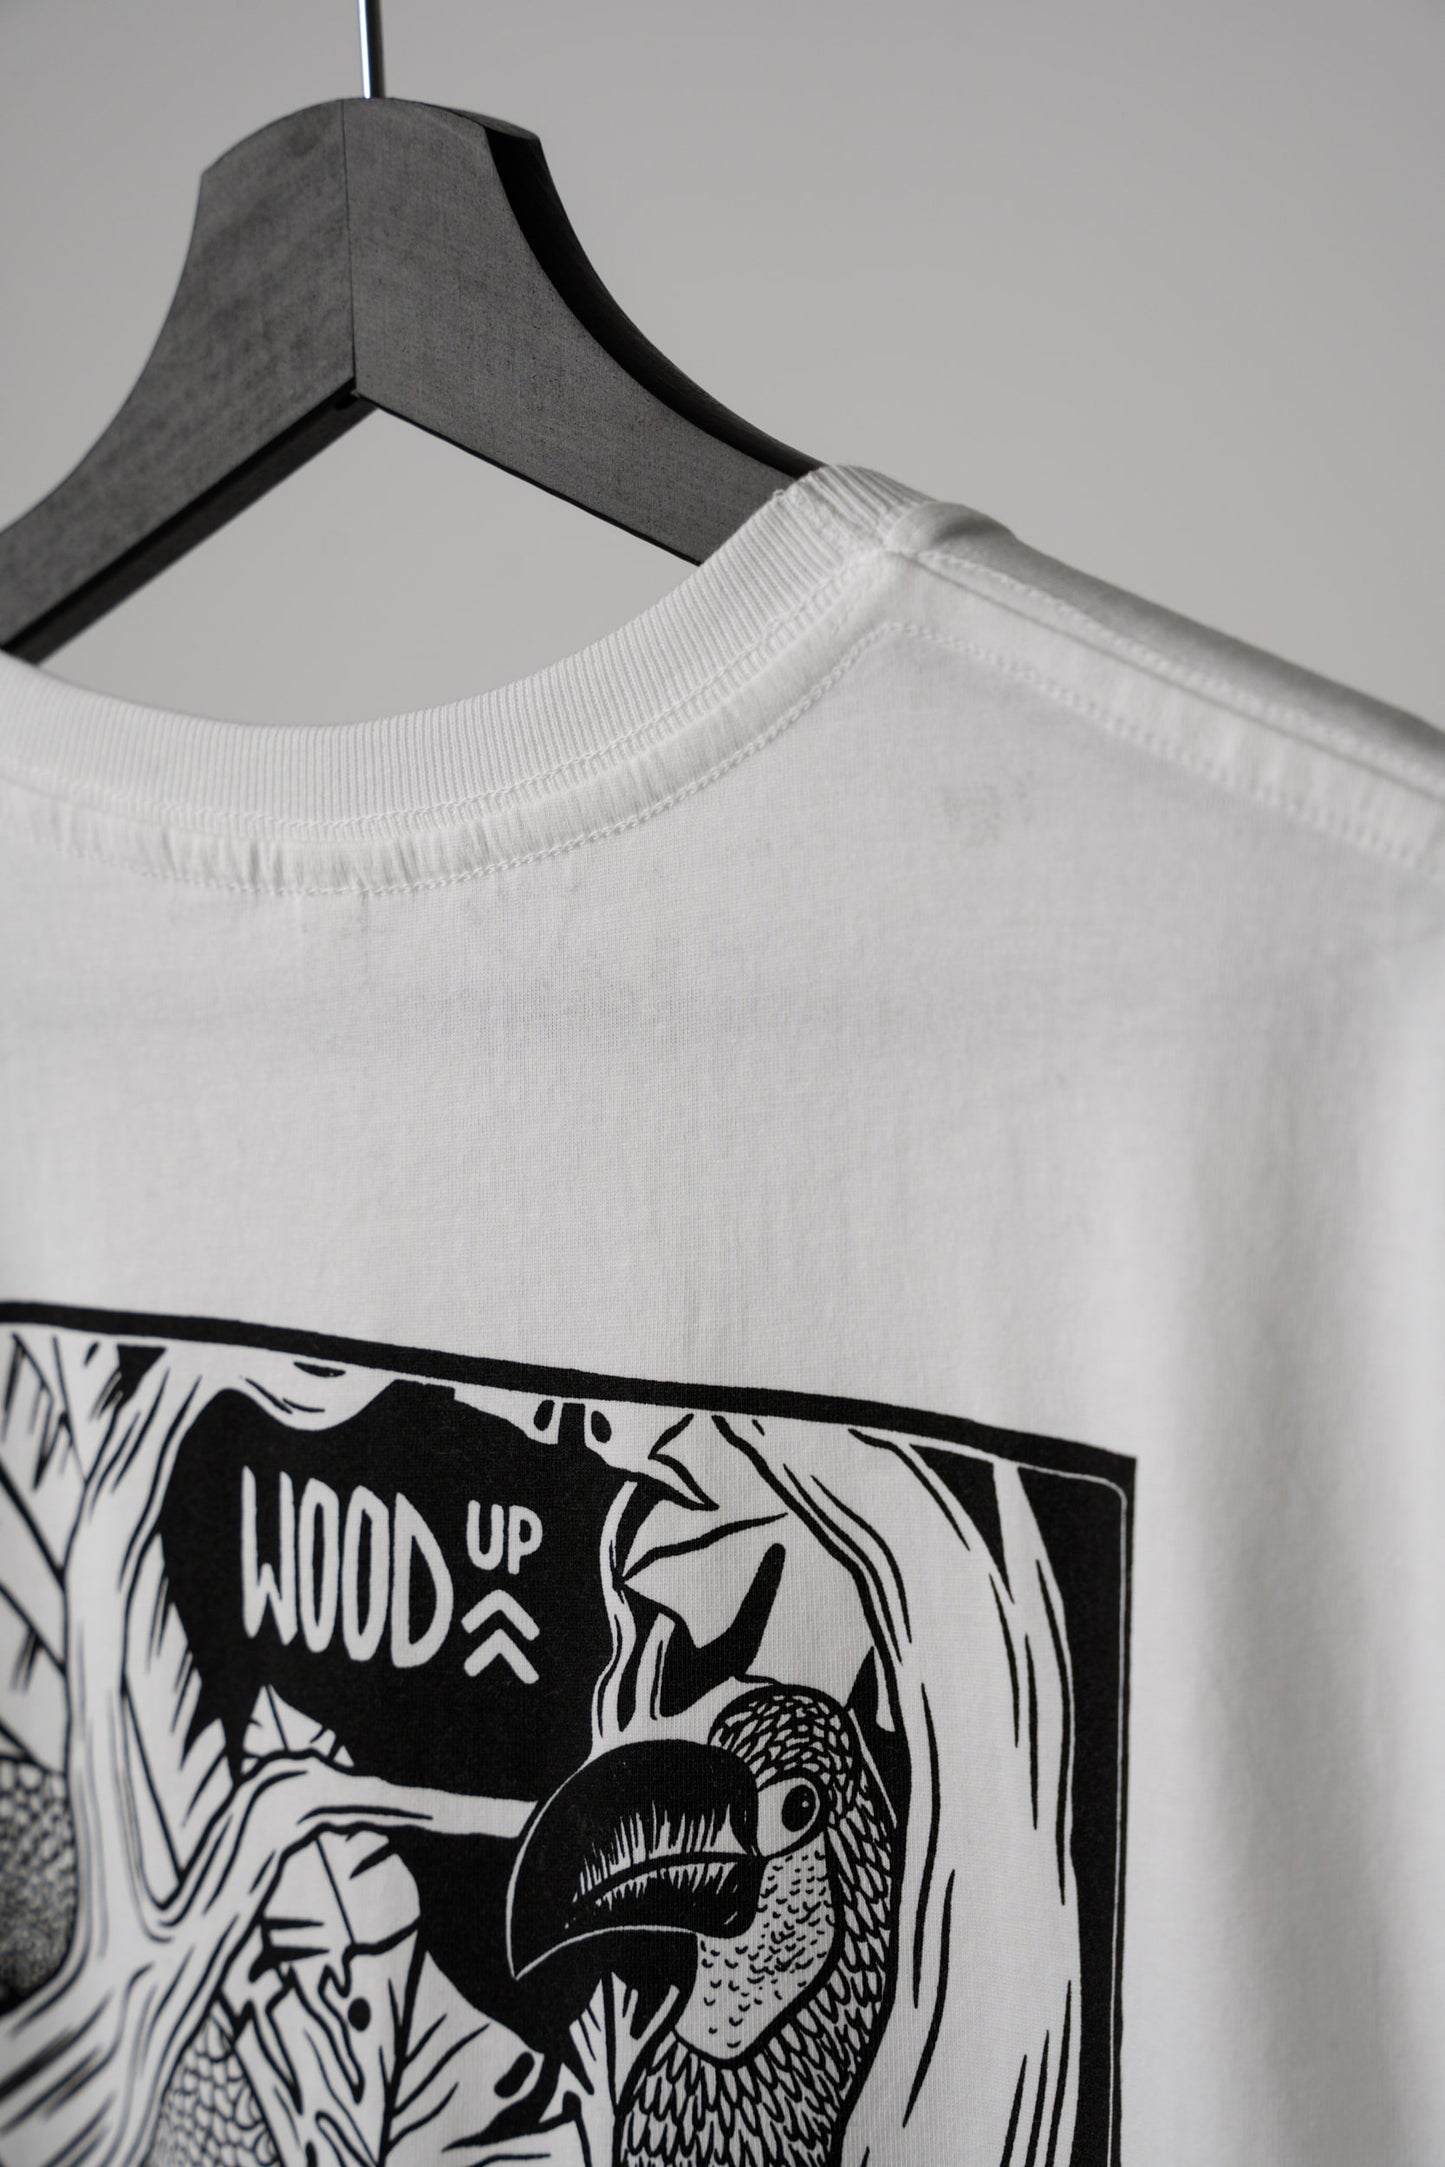 Wood Up – T-Shirt